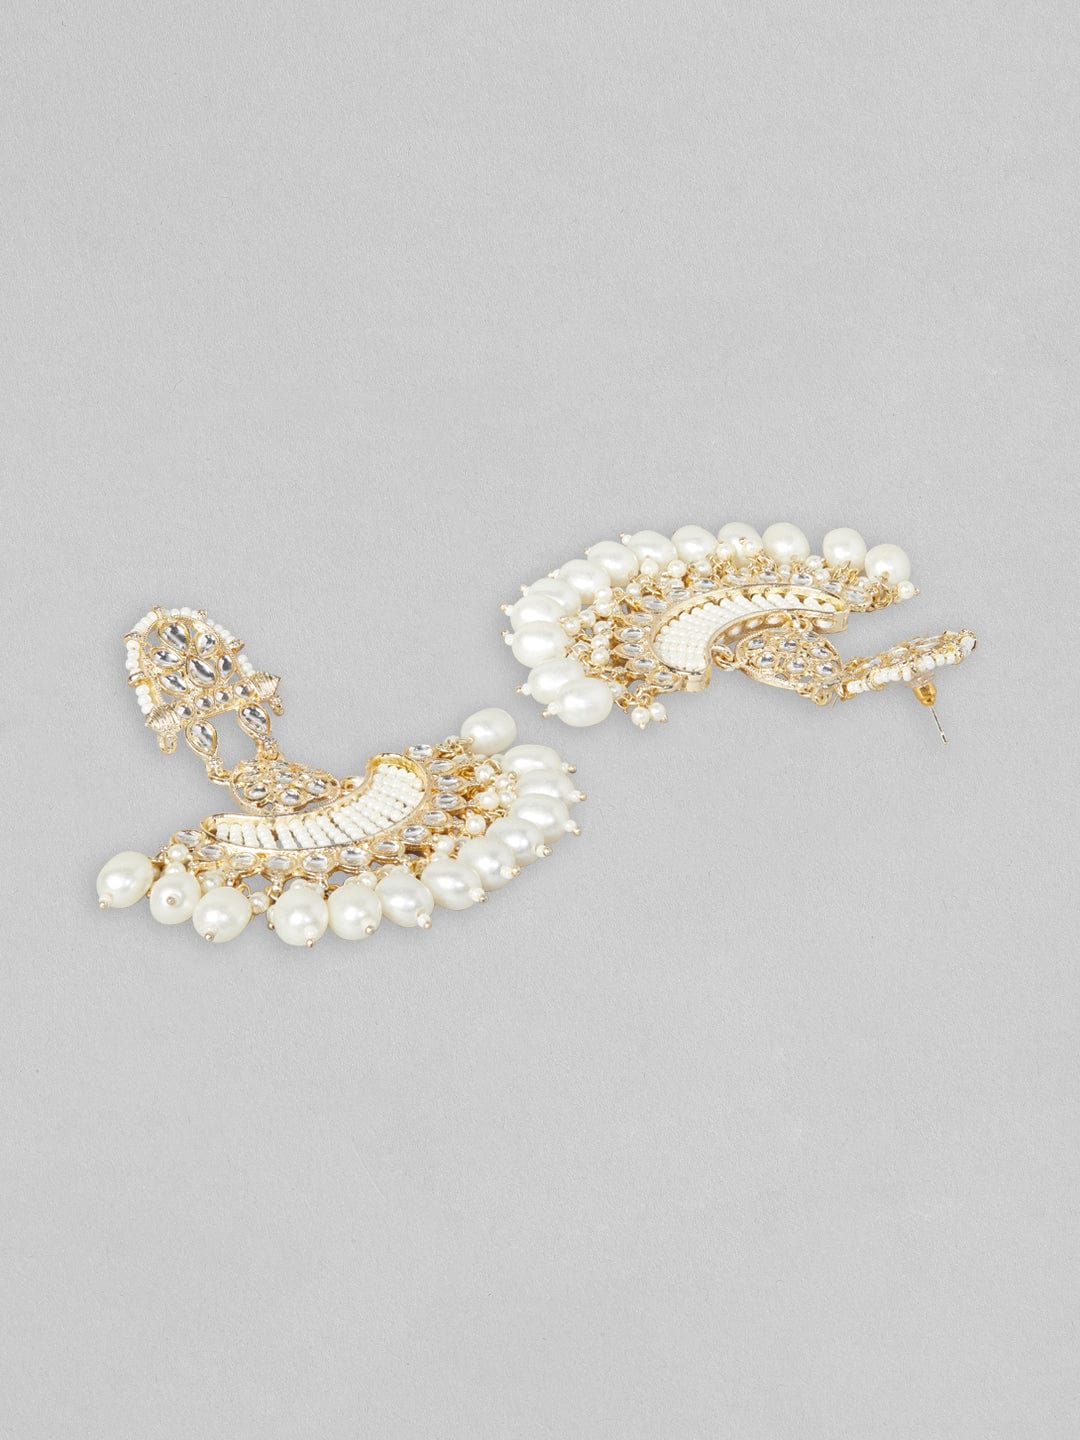 Rubans 22K Gold Plated Kundan Chandbali Earrings With Pearls And Beads Earrings